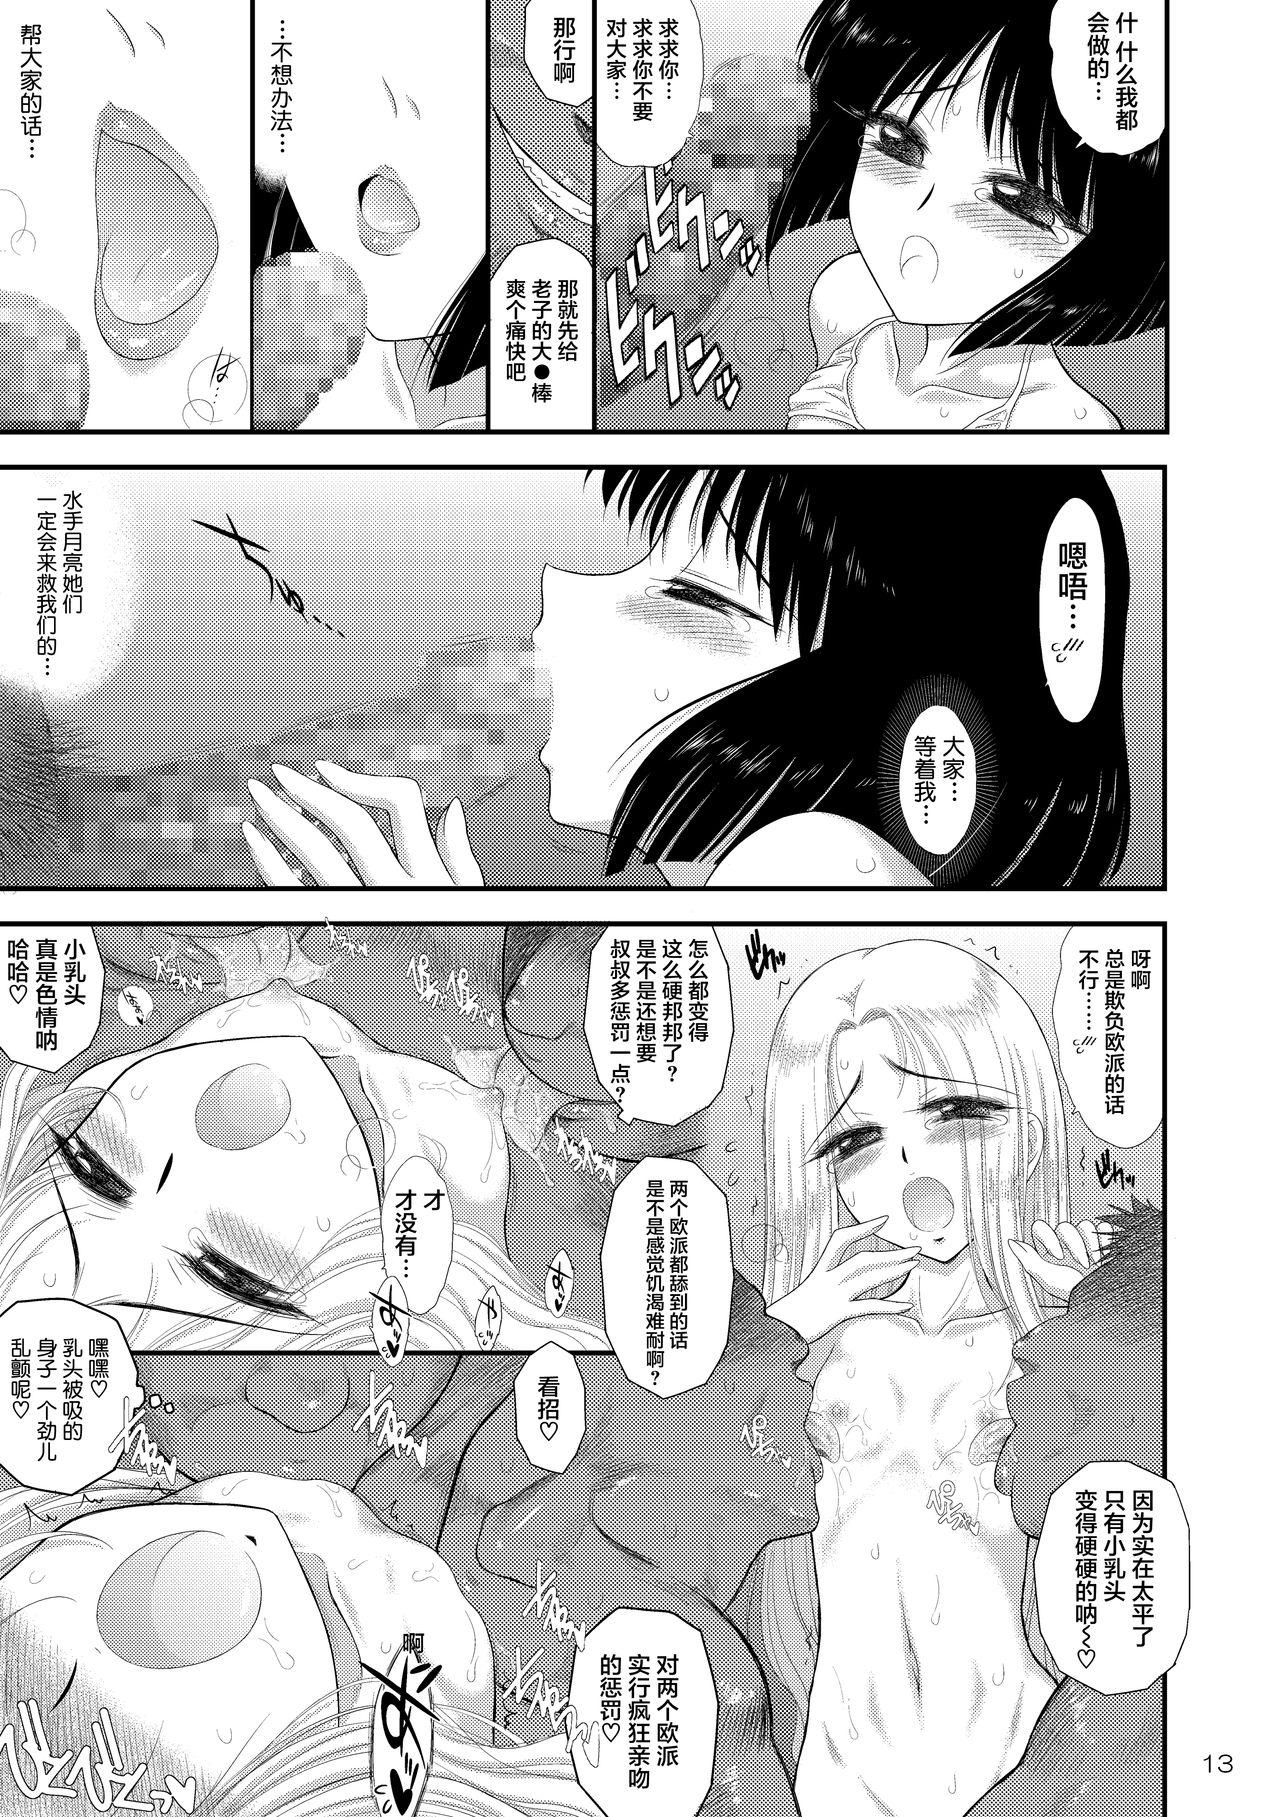 Sexy Girl Doyoubi no Joshi wa Gaman Dekinai - Sailor moon De Quatro - Page 13